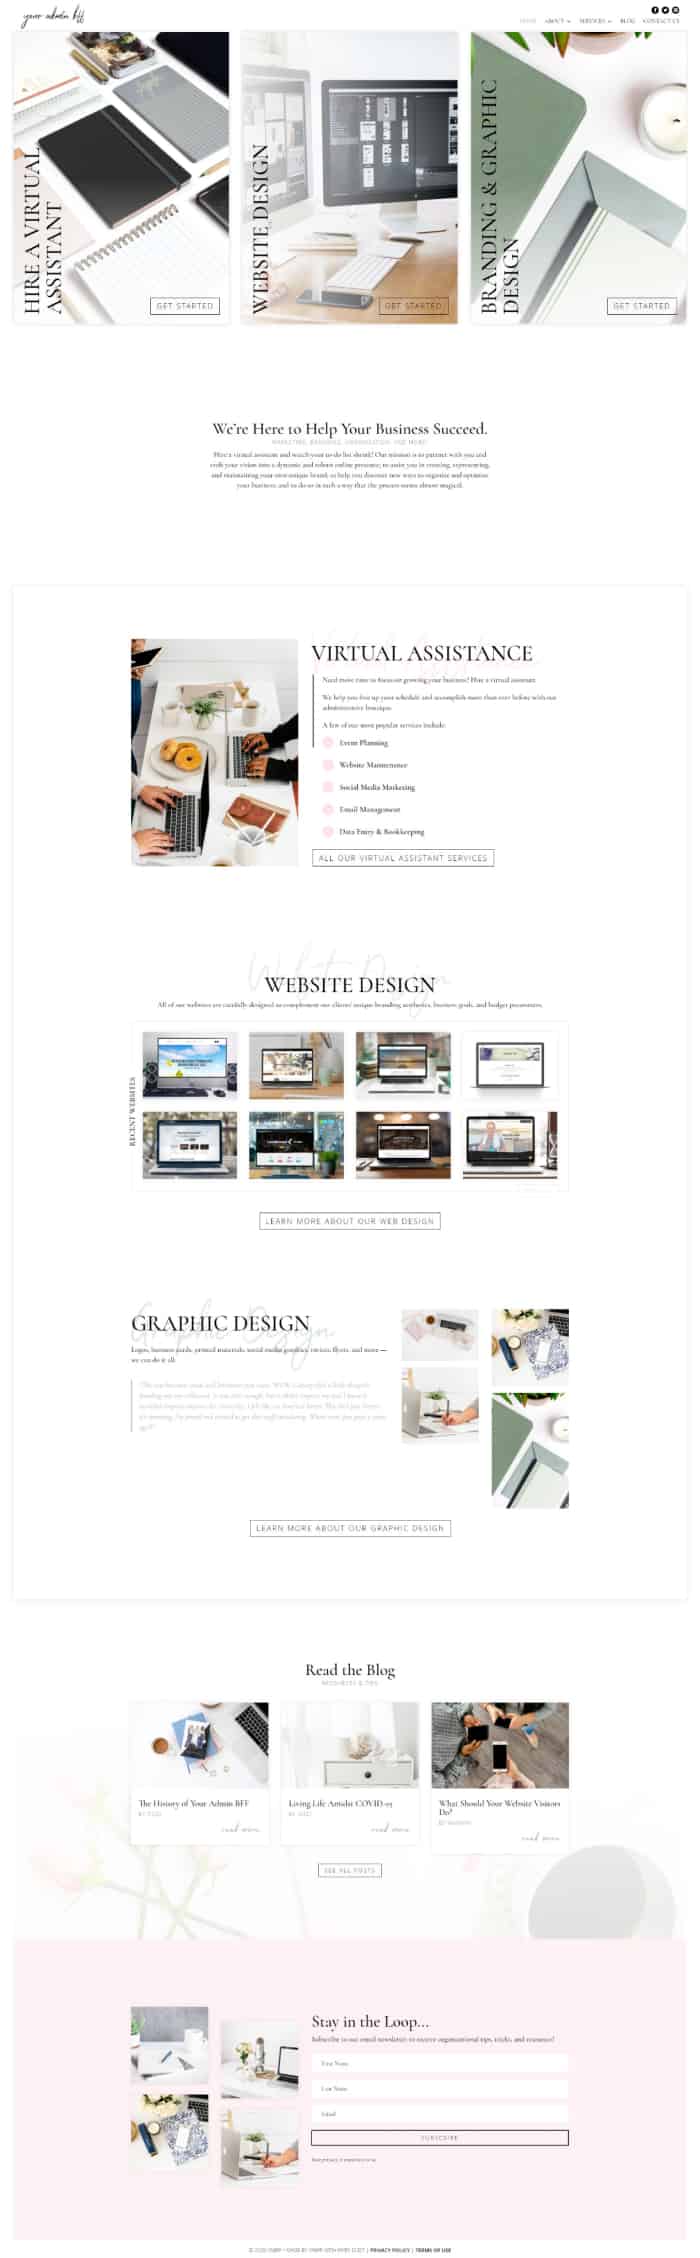 websites, web design, web development, Omaha web design, graphic design, social media